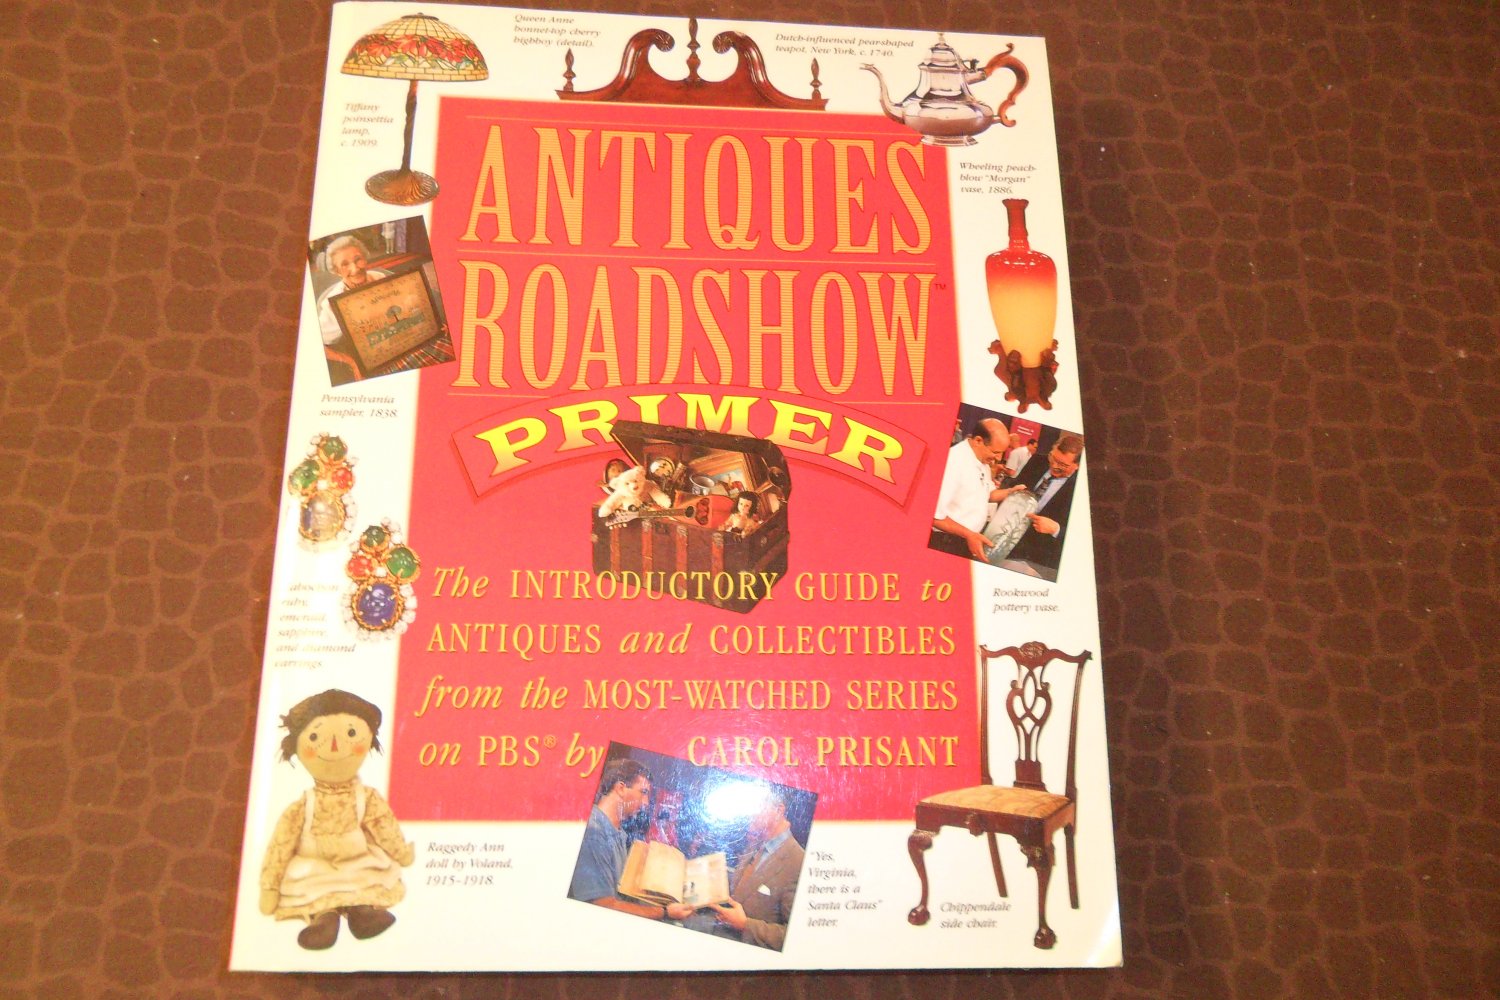 1999 Antiques Roadshow Primer Book by Carol Prisant